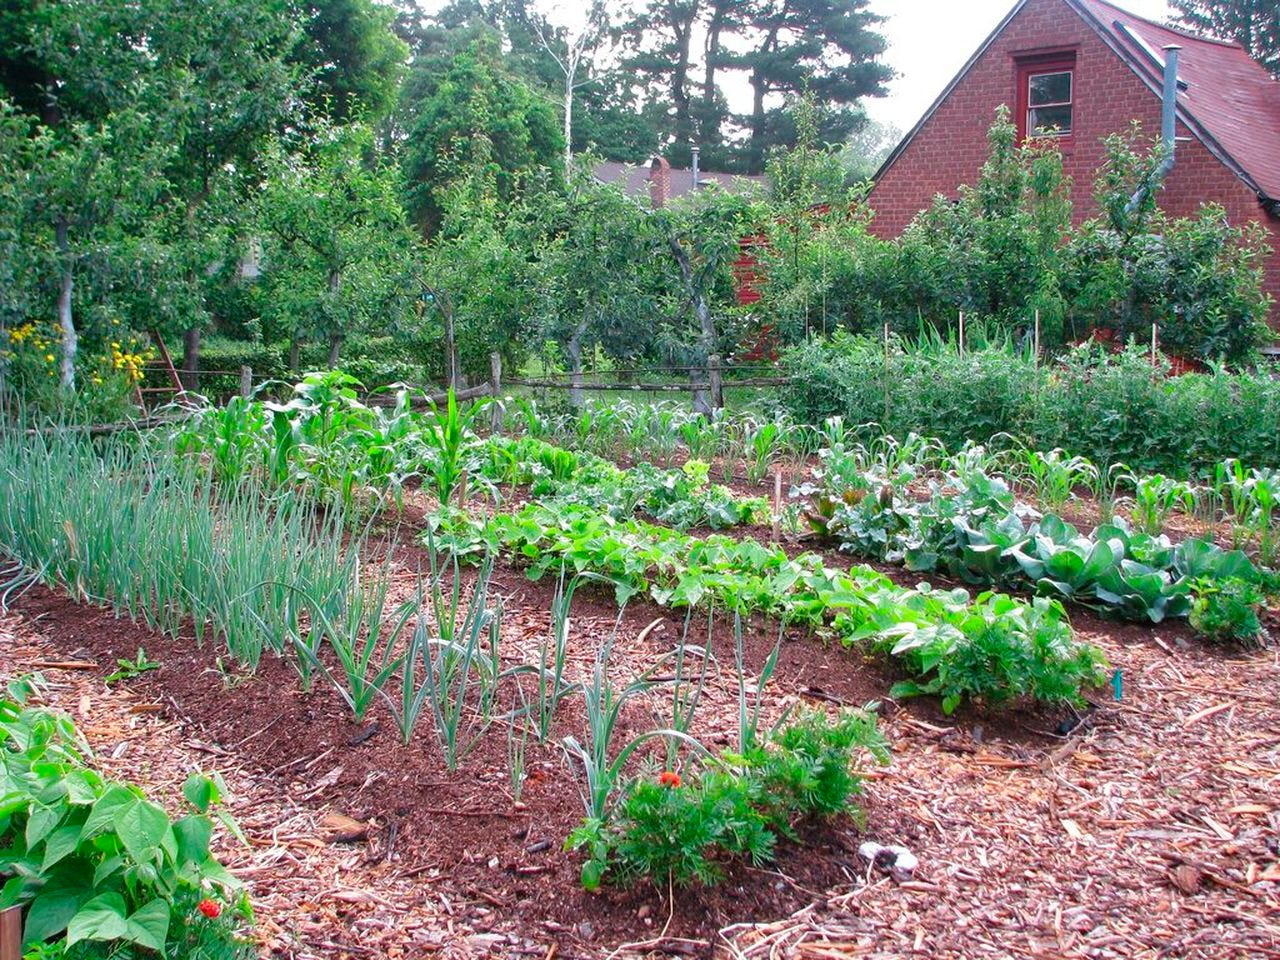 How to start a vegetable garden: The basics - cleveland.com